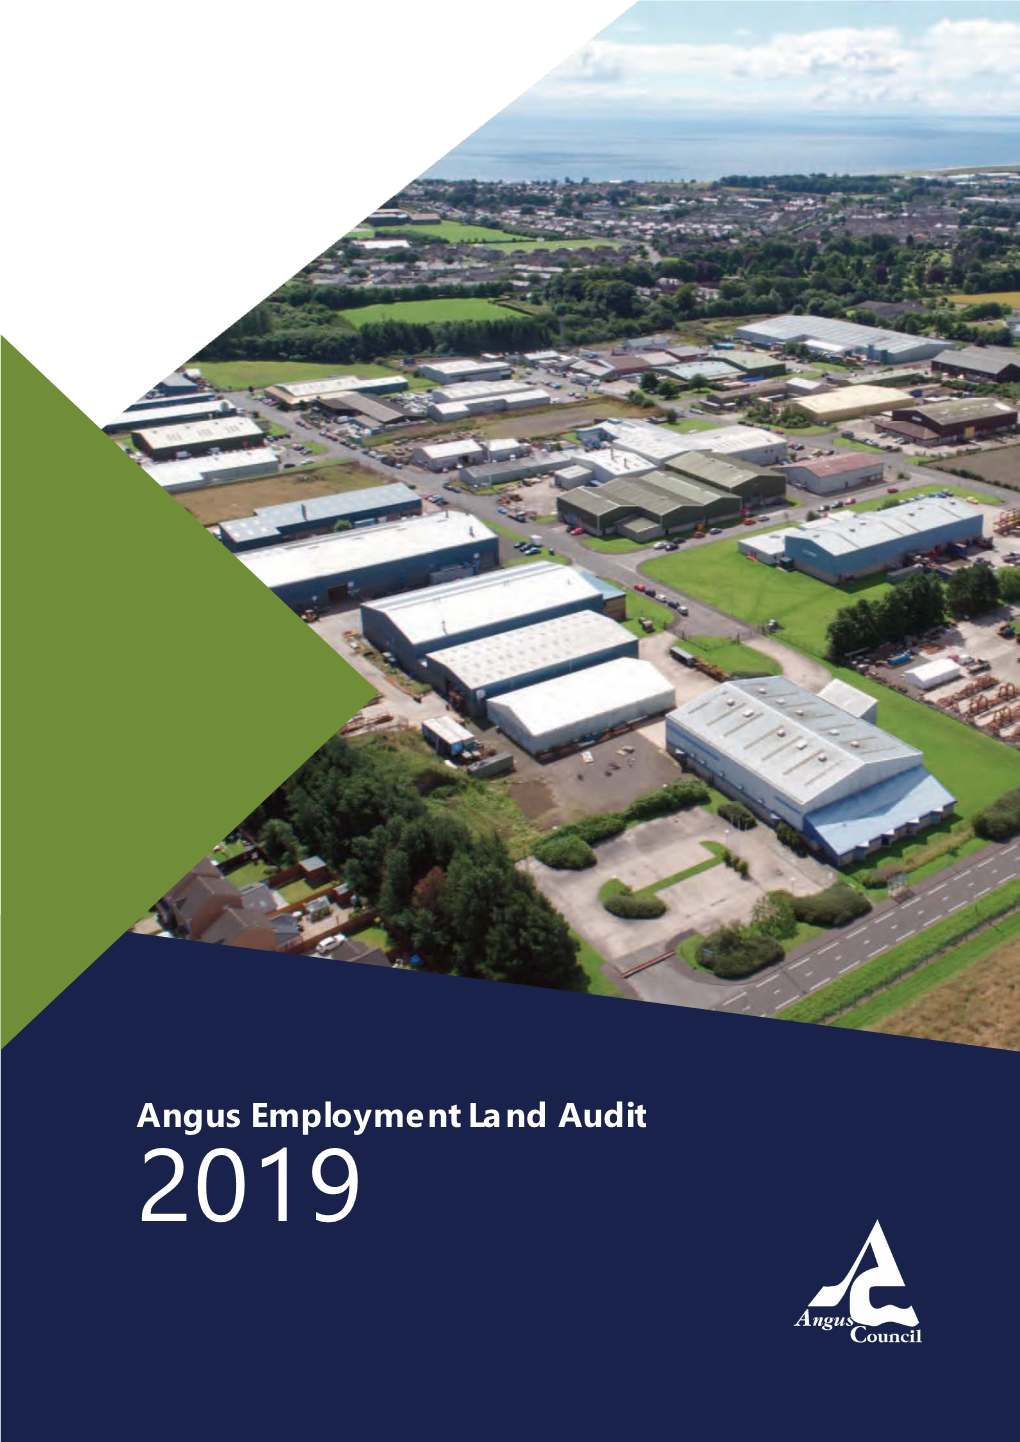 Angus Employment Land Audit 2019 Contents